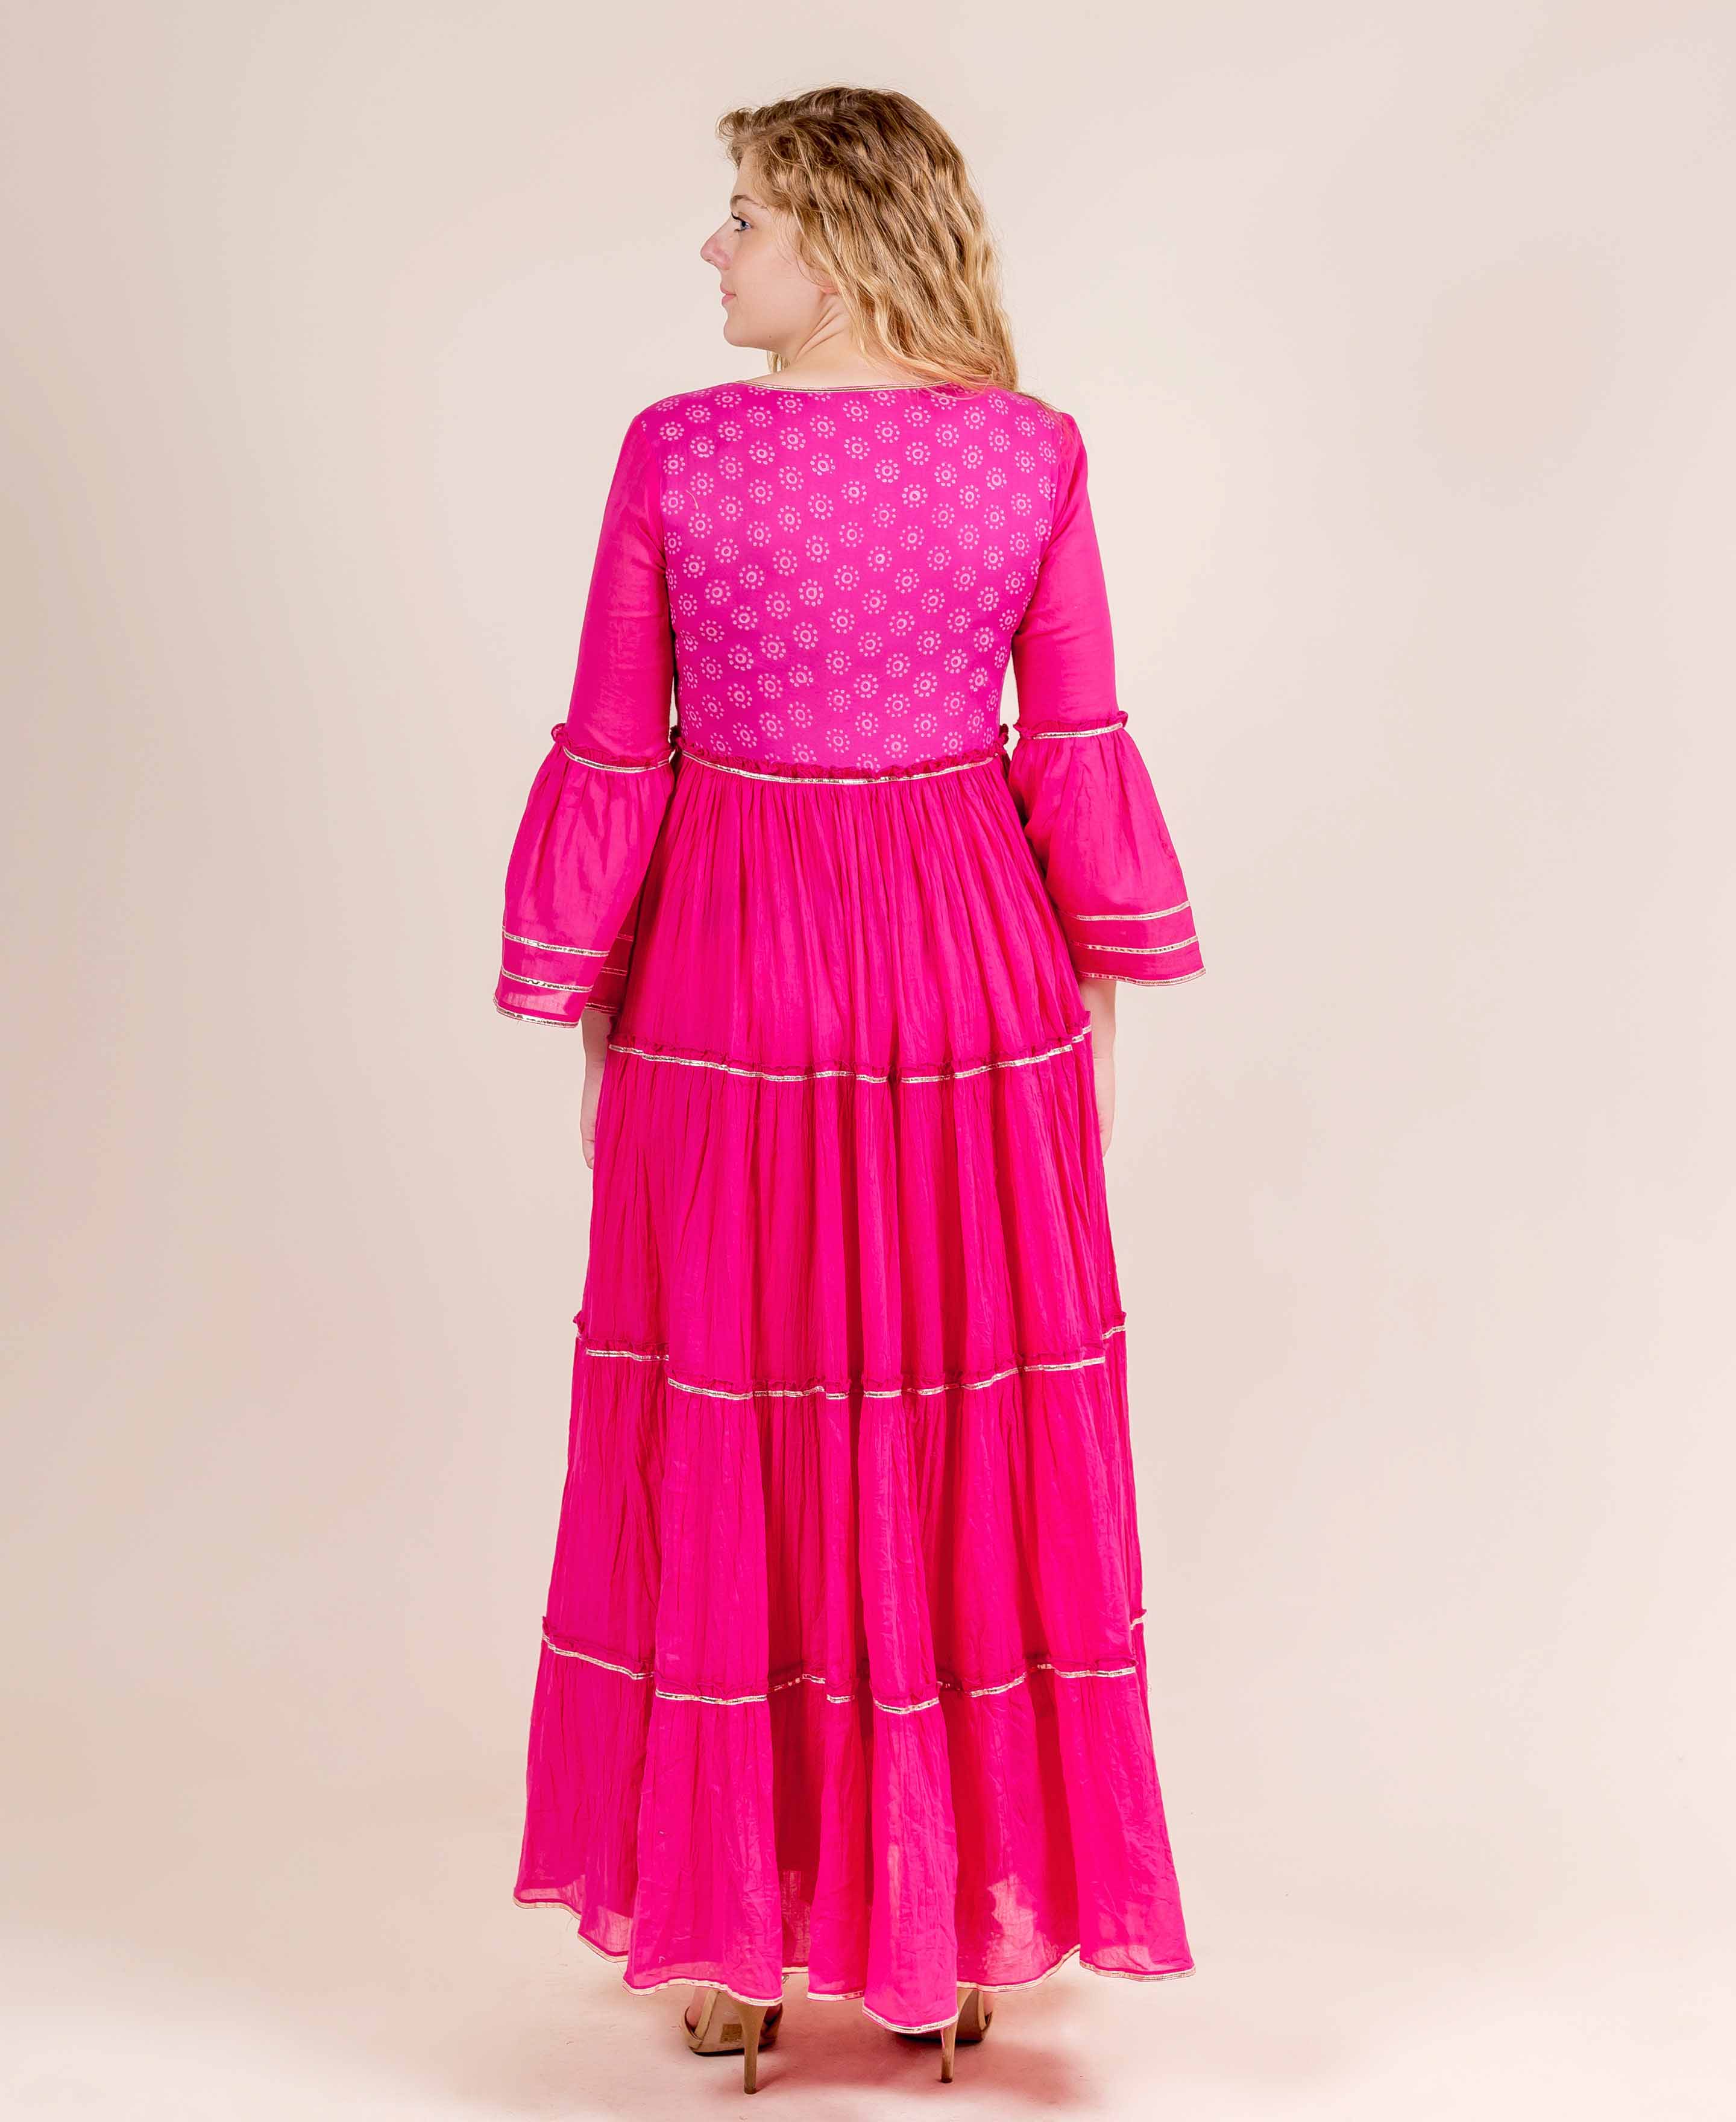 Buy Online Women Pretty Pink Solid Sweetheart Neck Dress at best price   Plussin